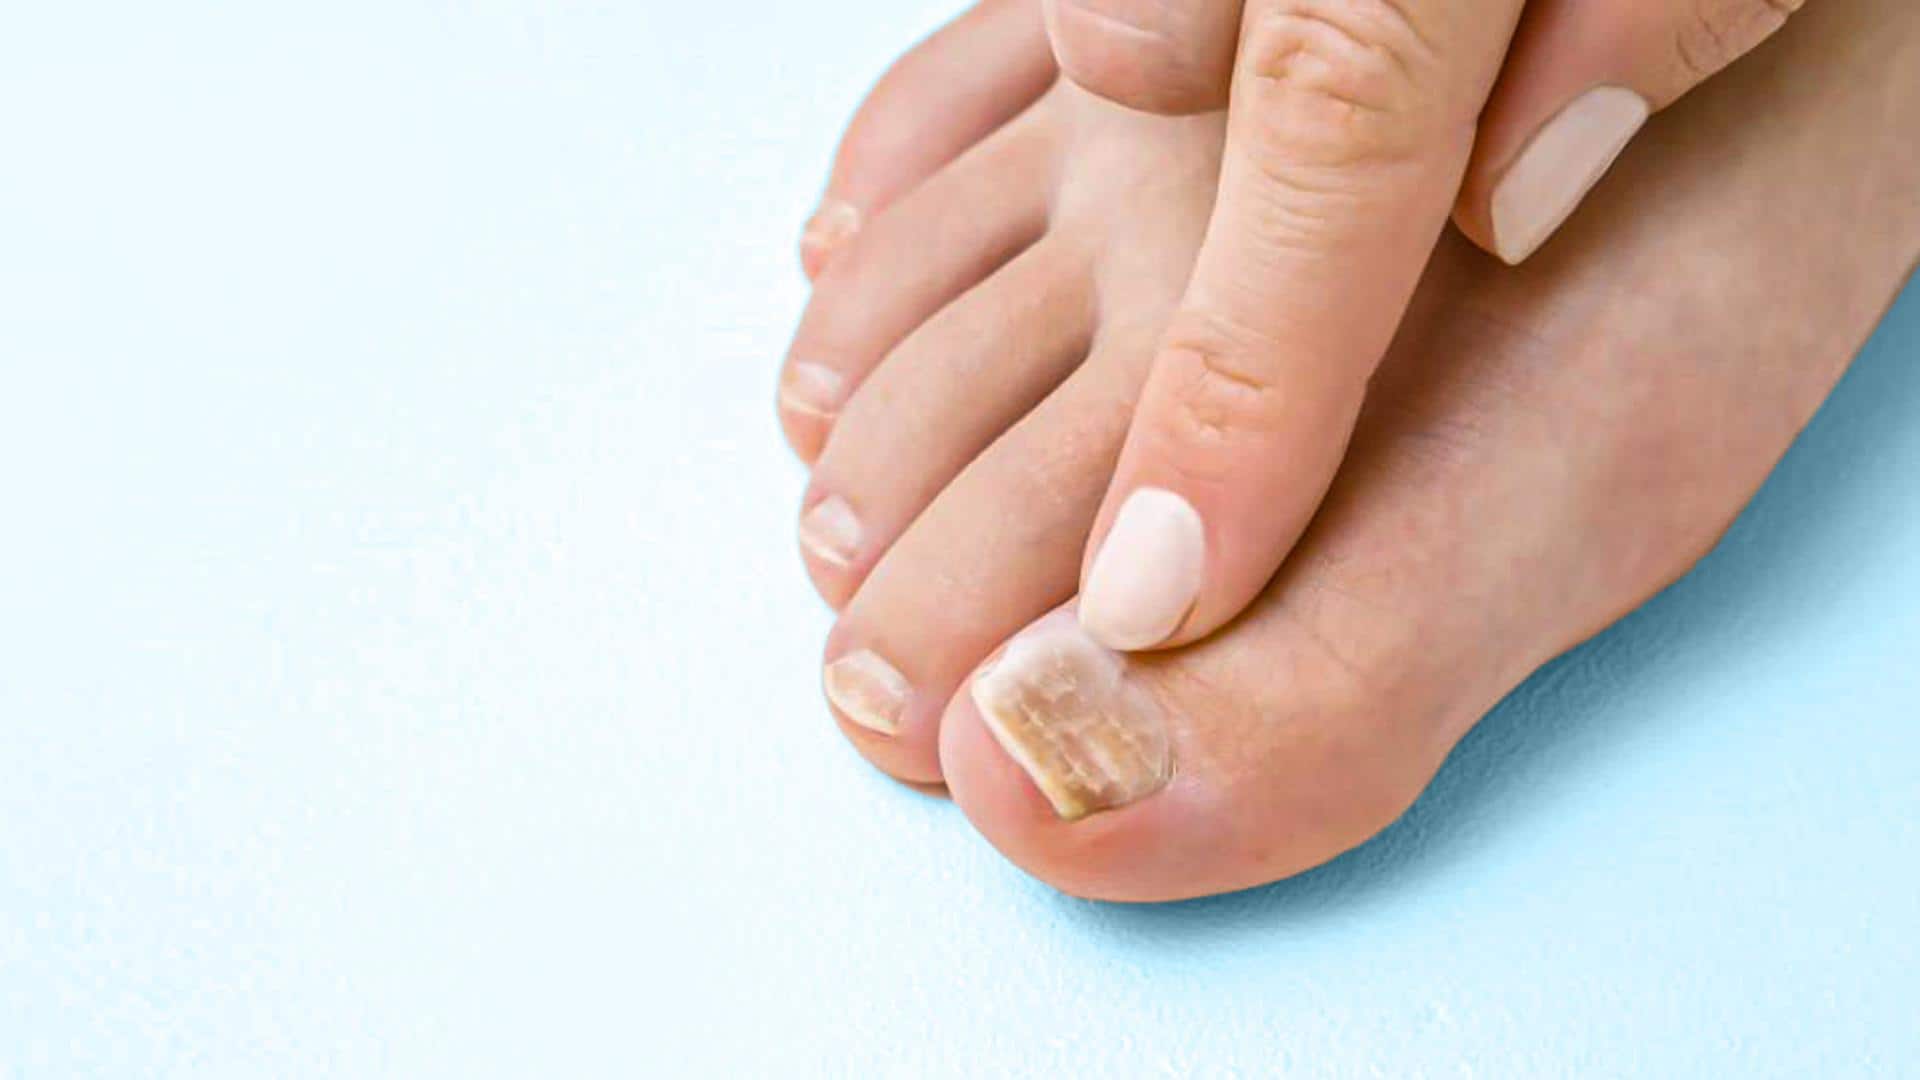 5 effective home remedies to treat toenail fungus